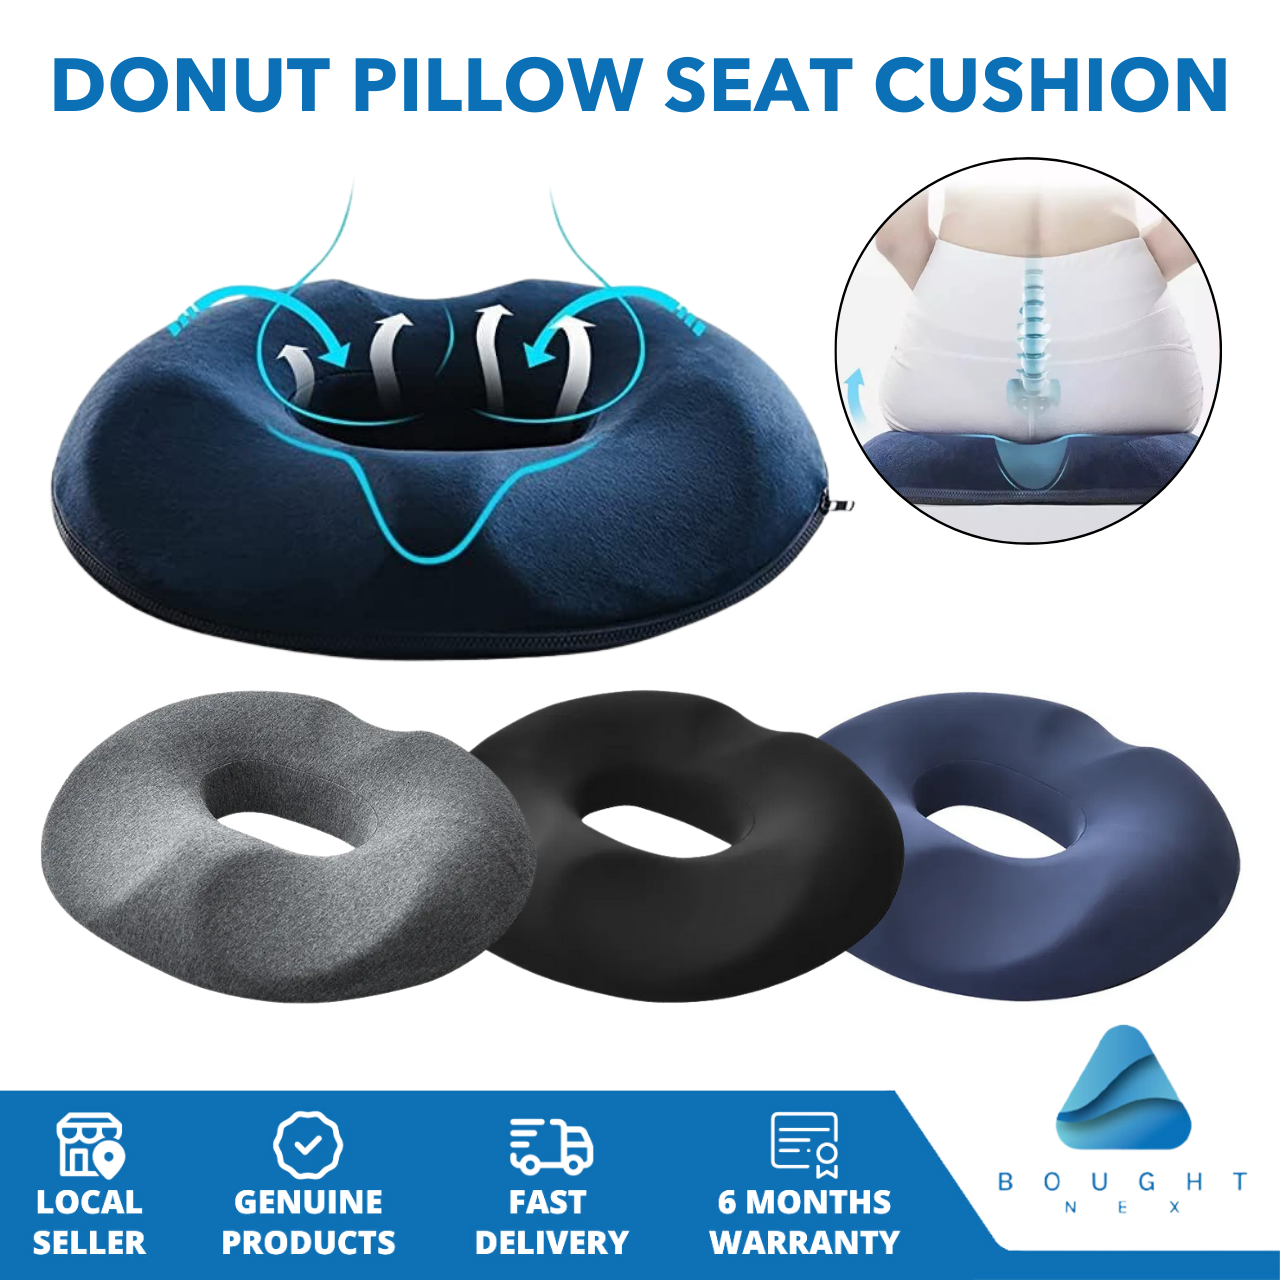 MedPro® MedPro Donut Cushion